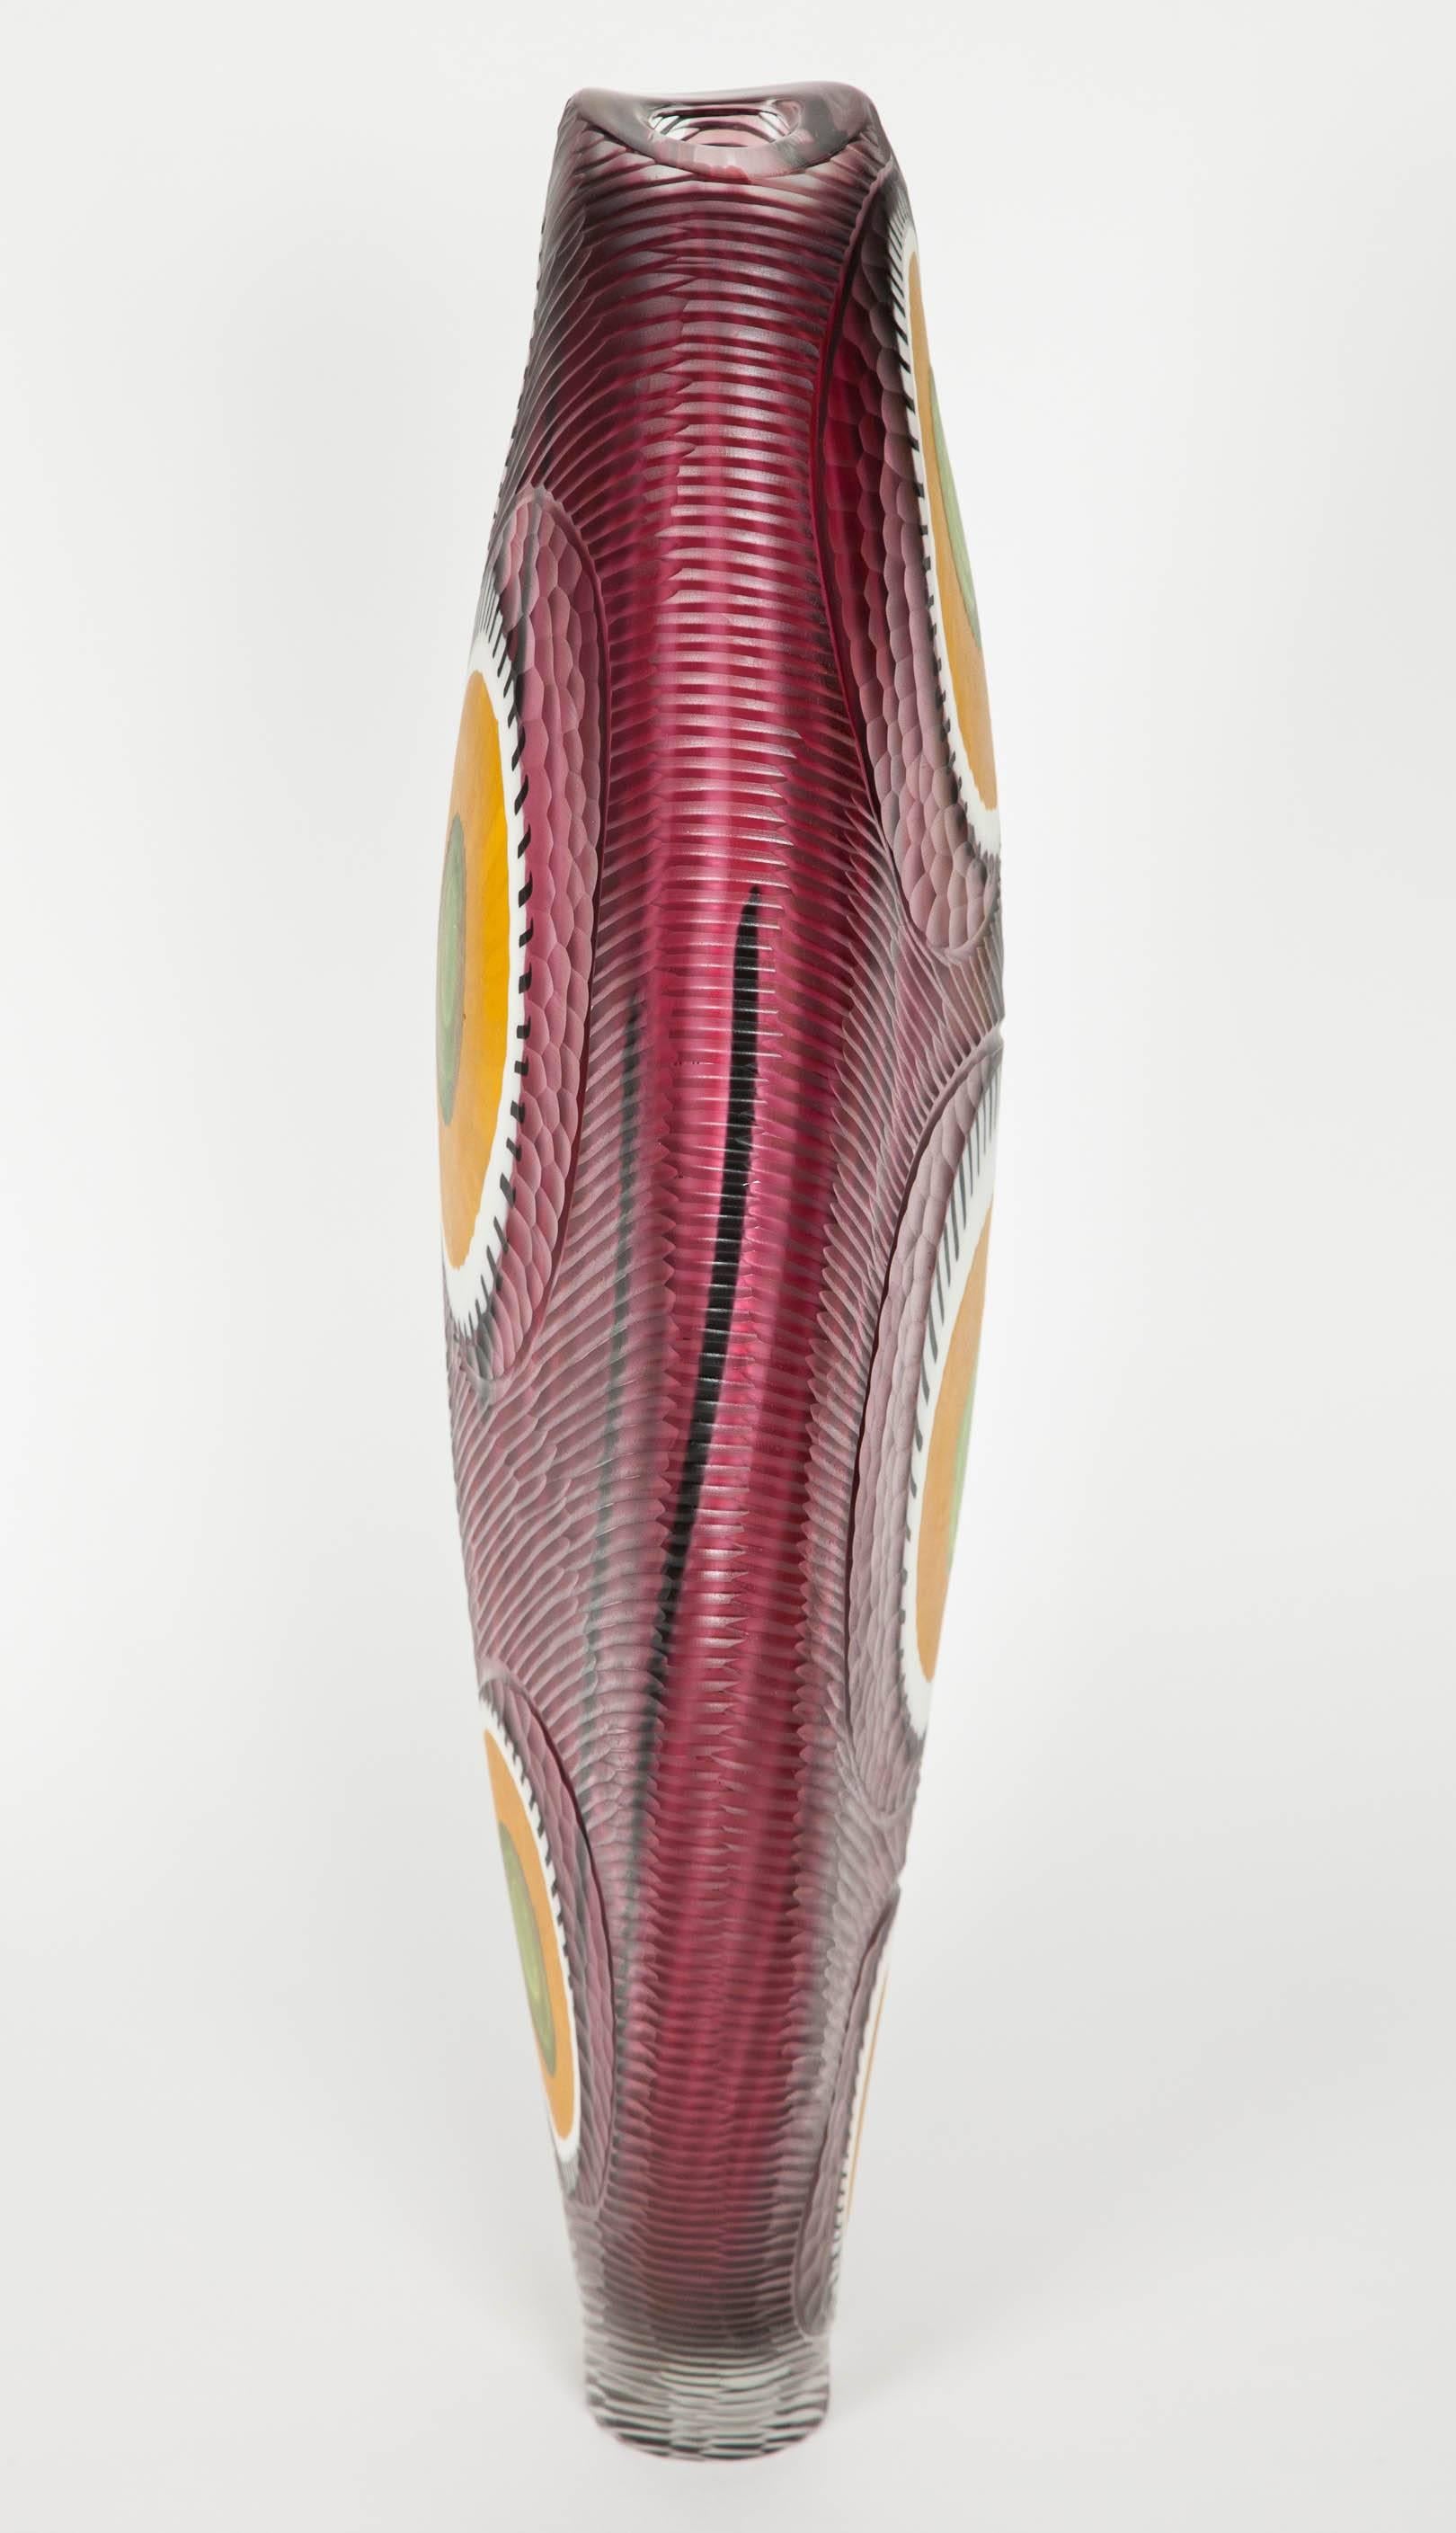 Italian Evviva II, a mixed coloured sculptural glass vase by Marco & Mattia Salvadore For Sale